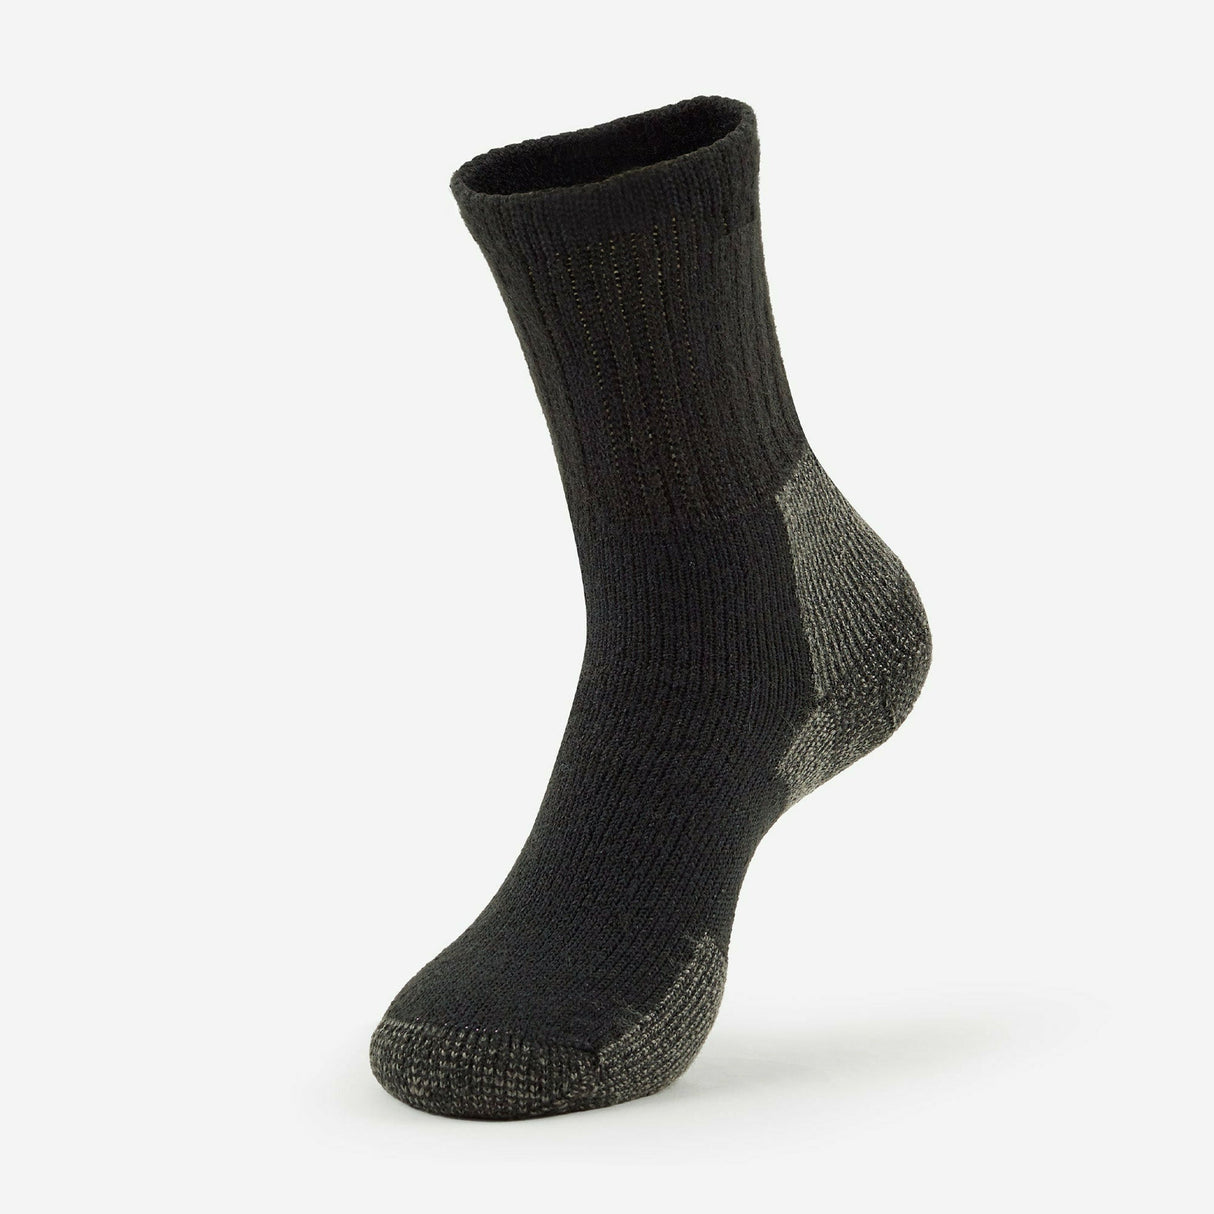 Thorlo Womens Maximum Cushion Hiking Crew Socks  -  Small / Black / Single Pair